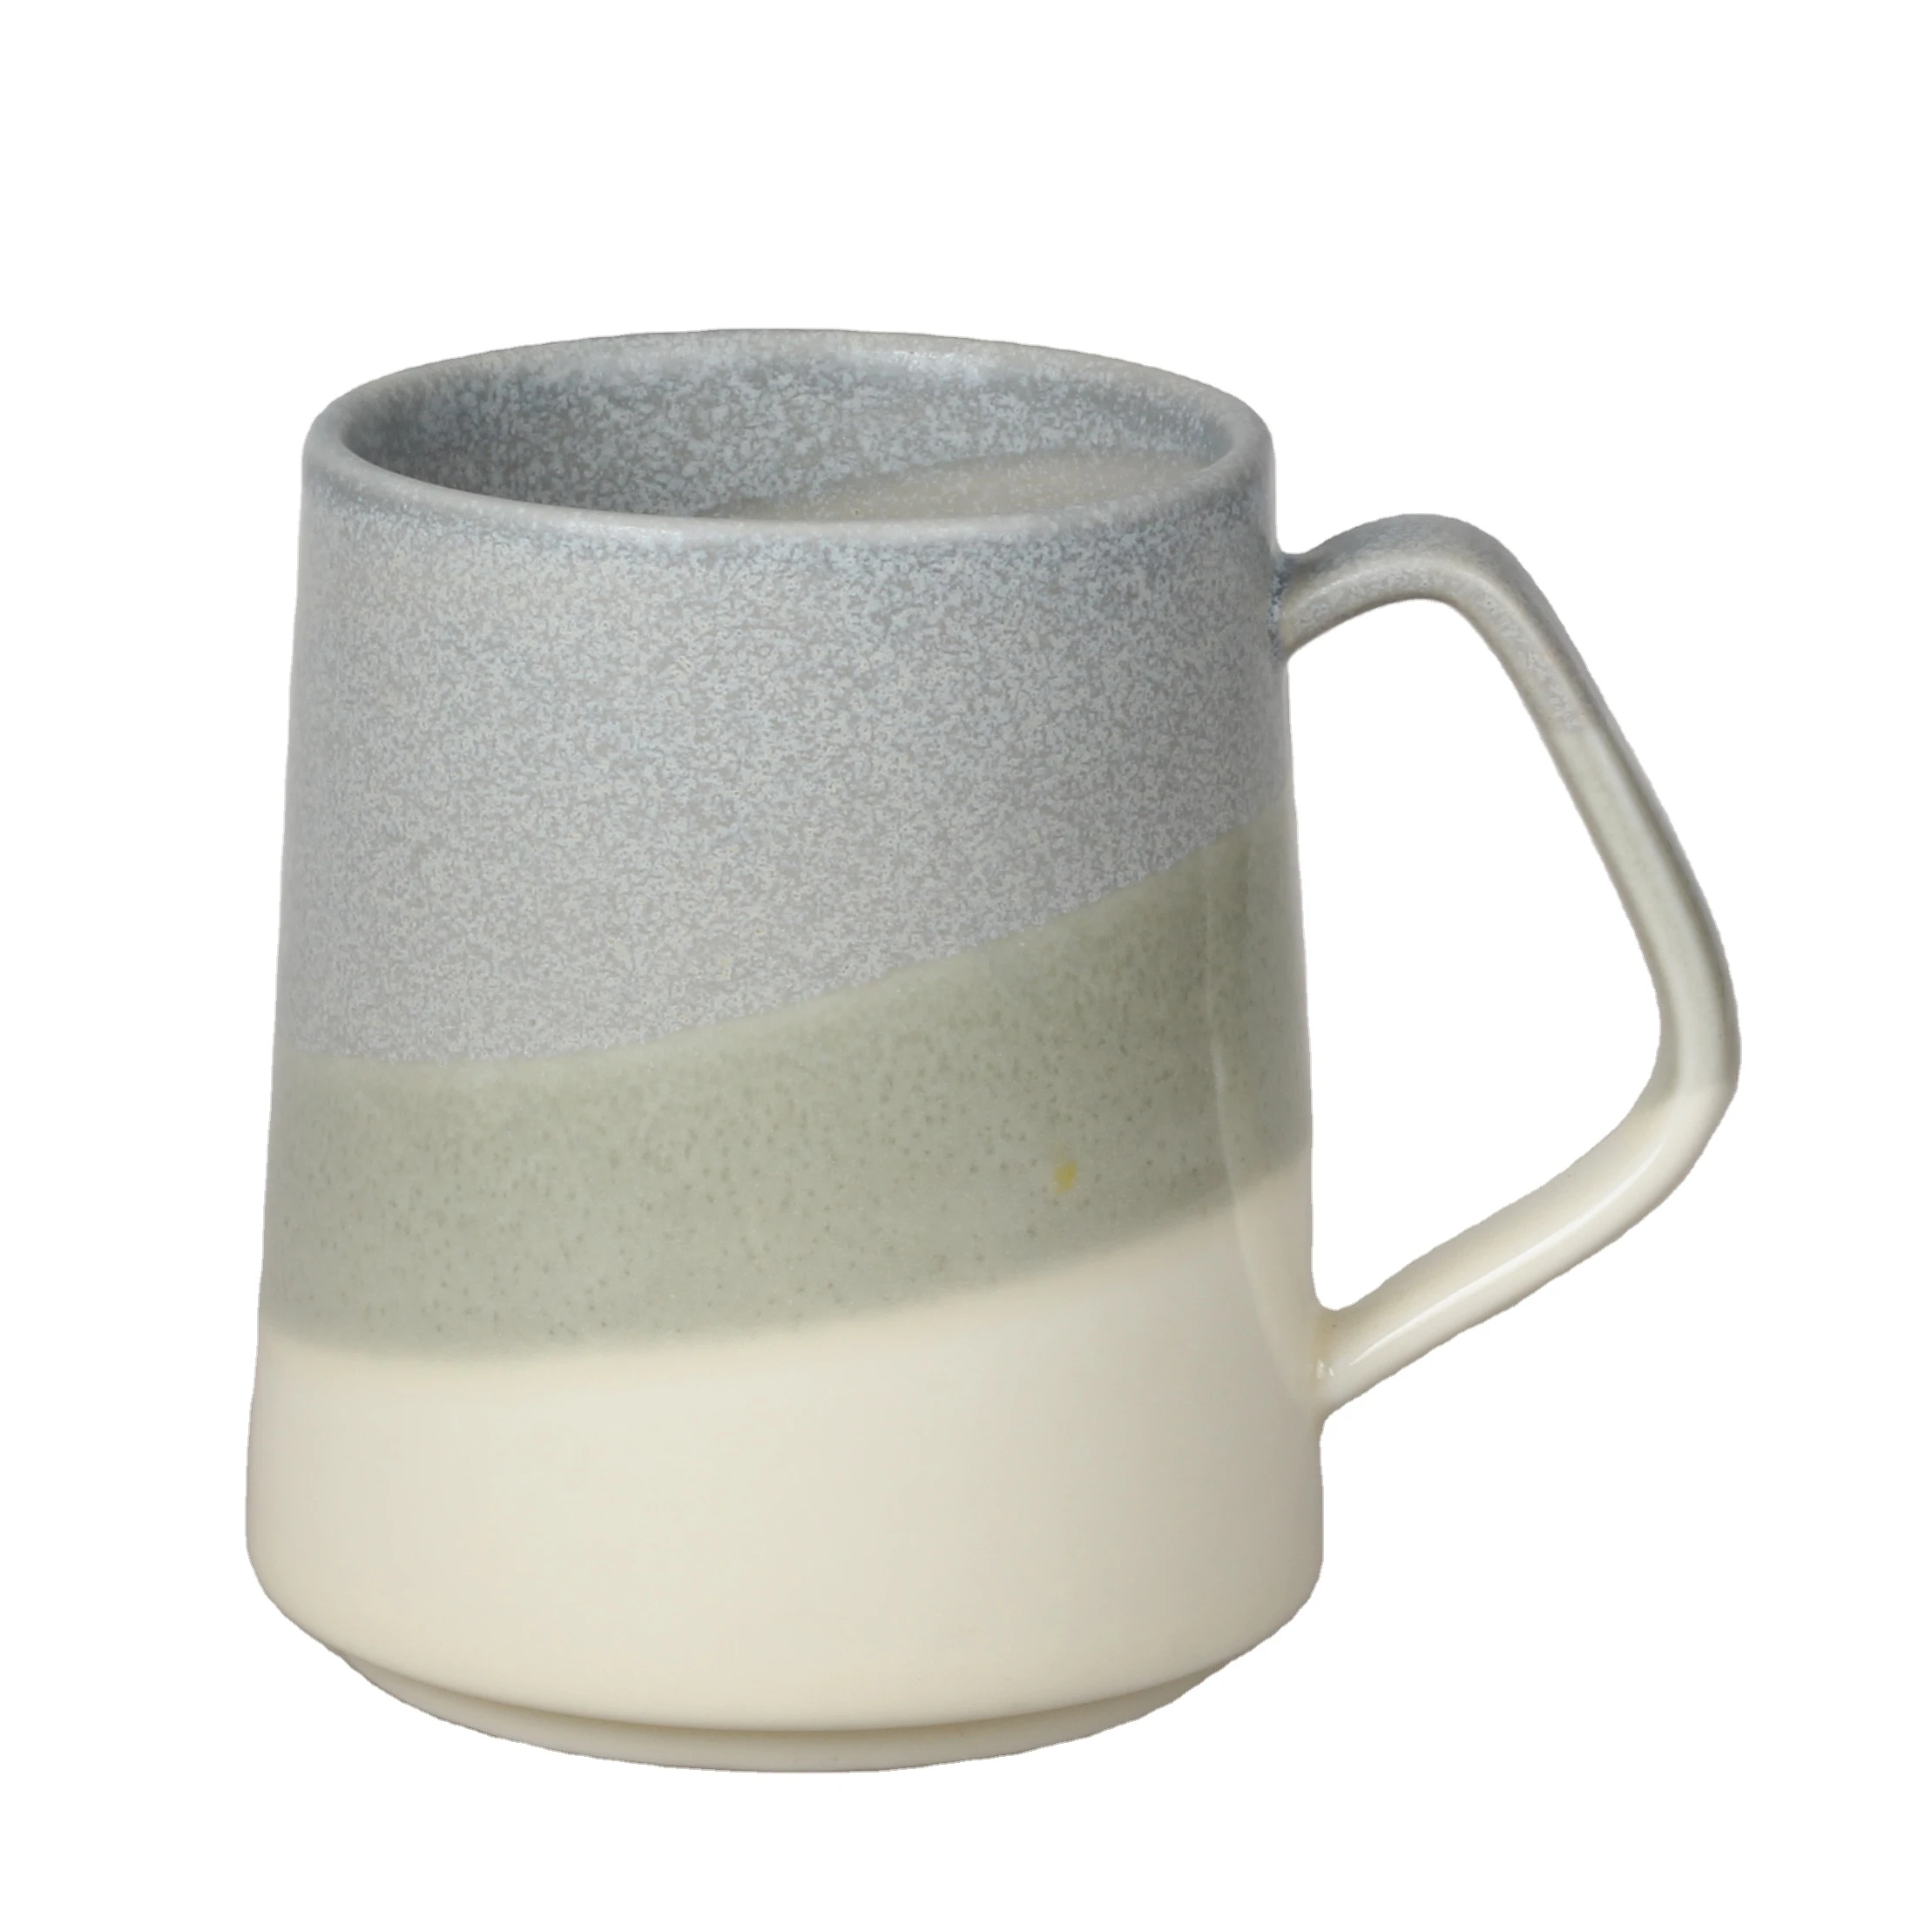 Unique reactive glazed coffee mugs vintage style japanese ceramic glaze mug turkish cup porcelain